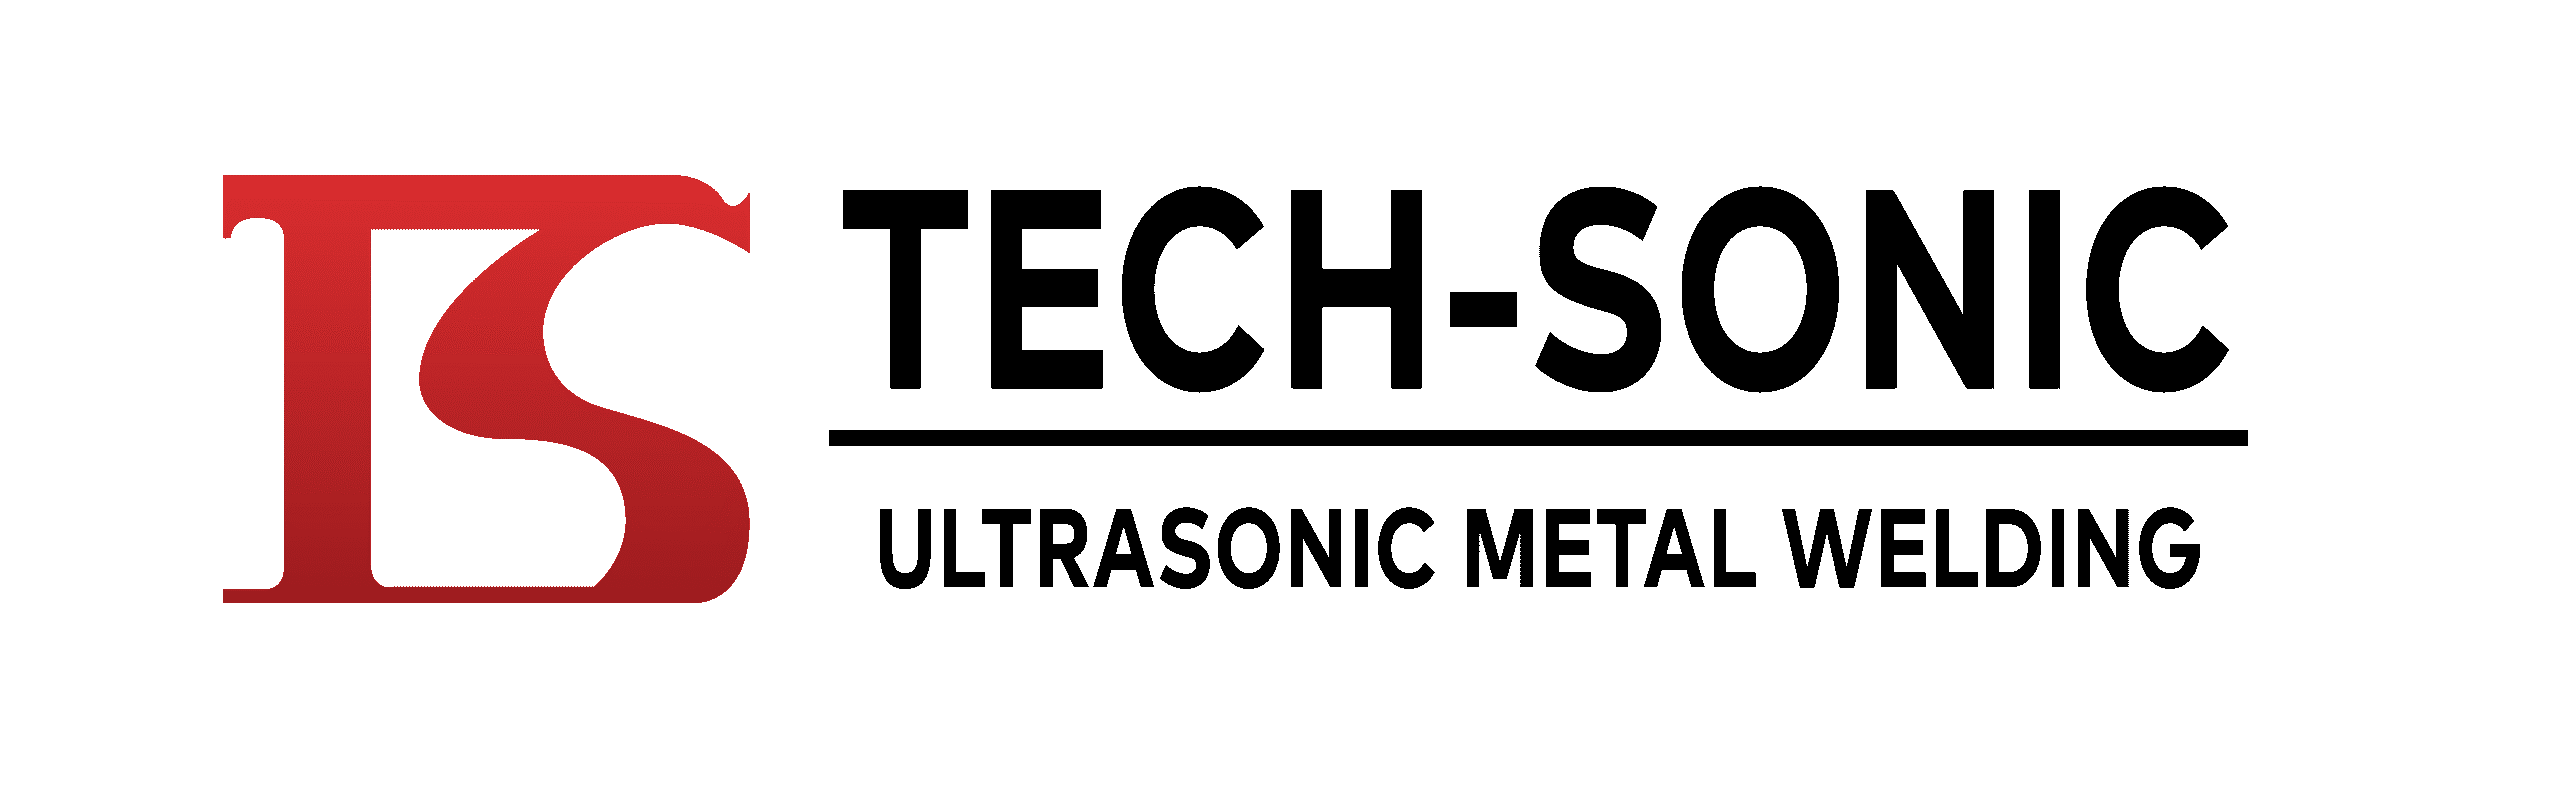 TECH - SONIC logo